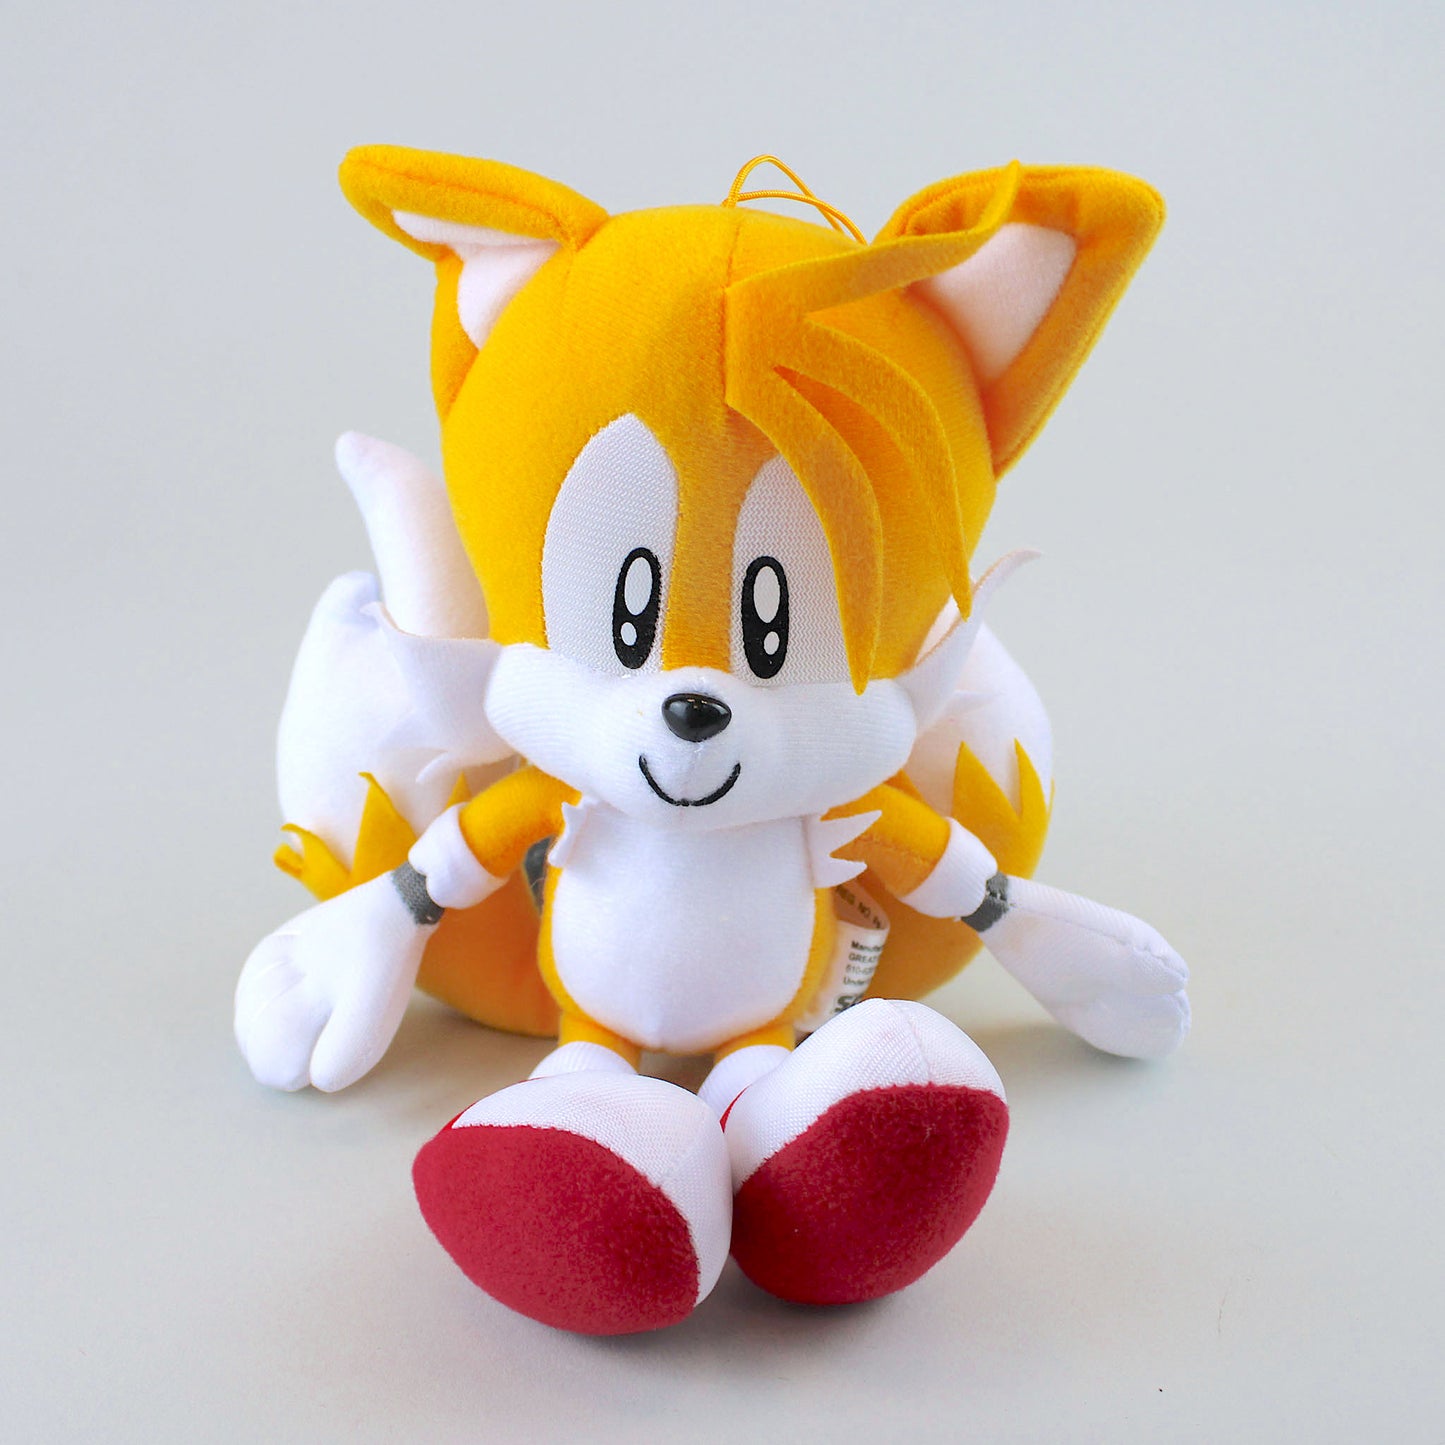 Tails the Fox (Sonic the Hedgehog) 8" Plush